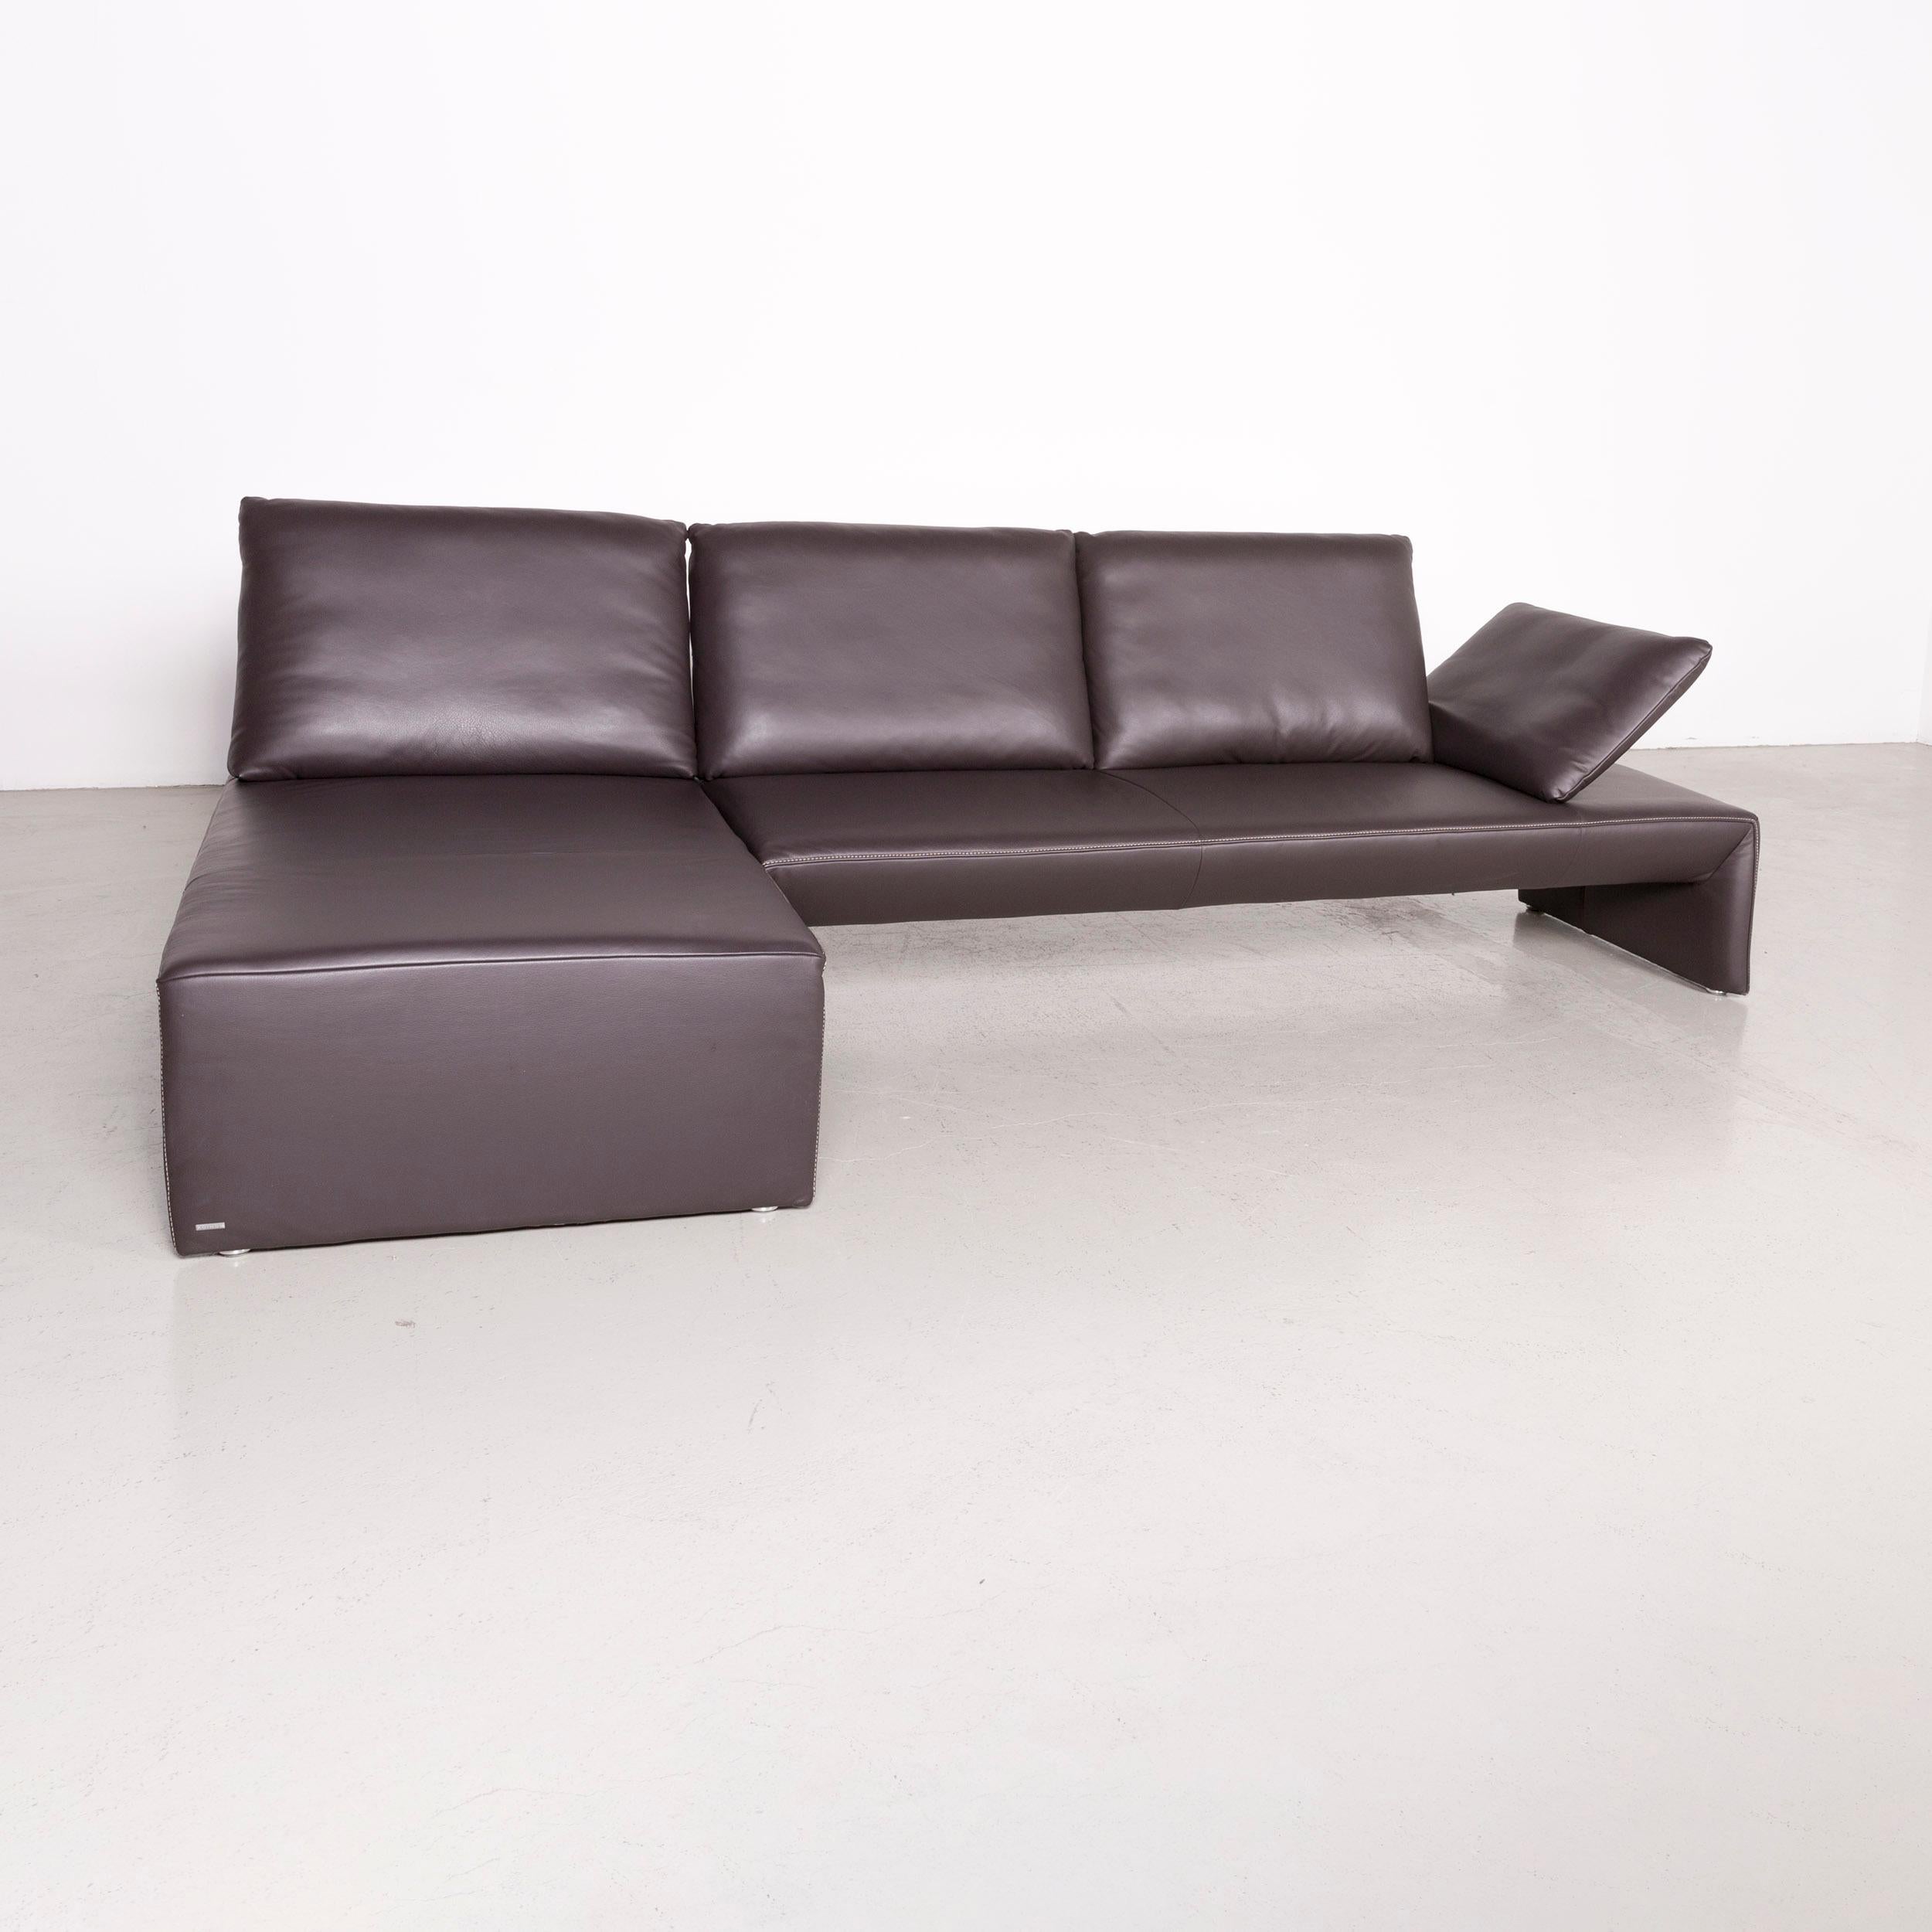 Koinor Rivo designer leather corner sofa brown couch.